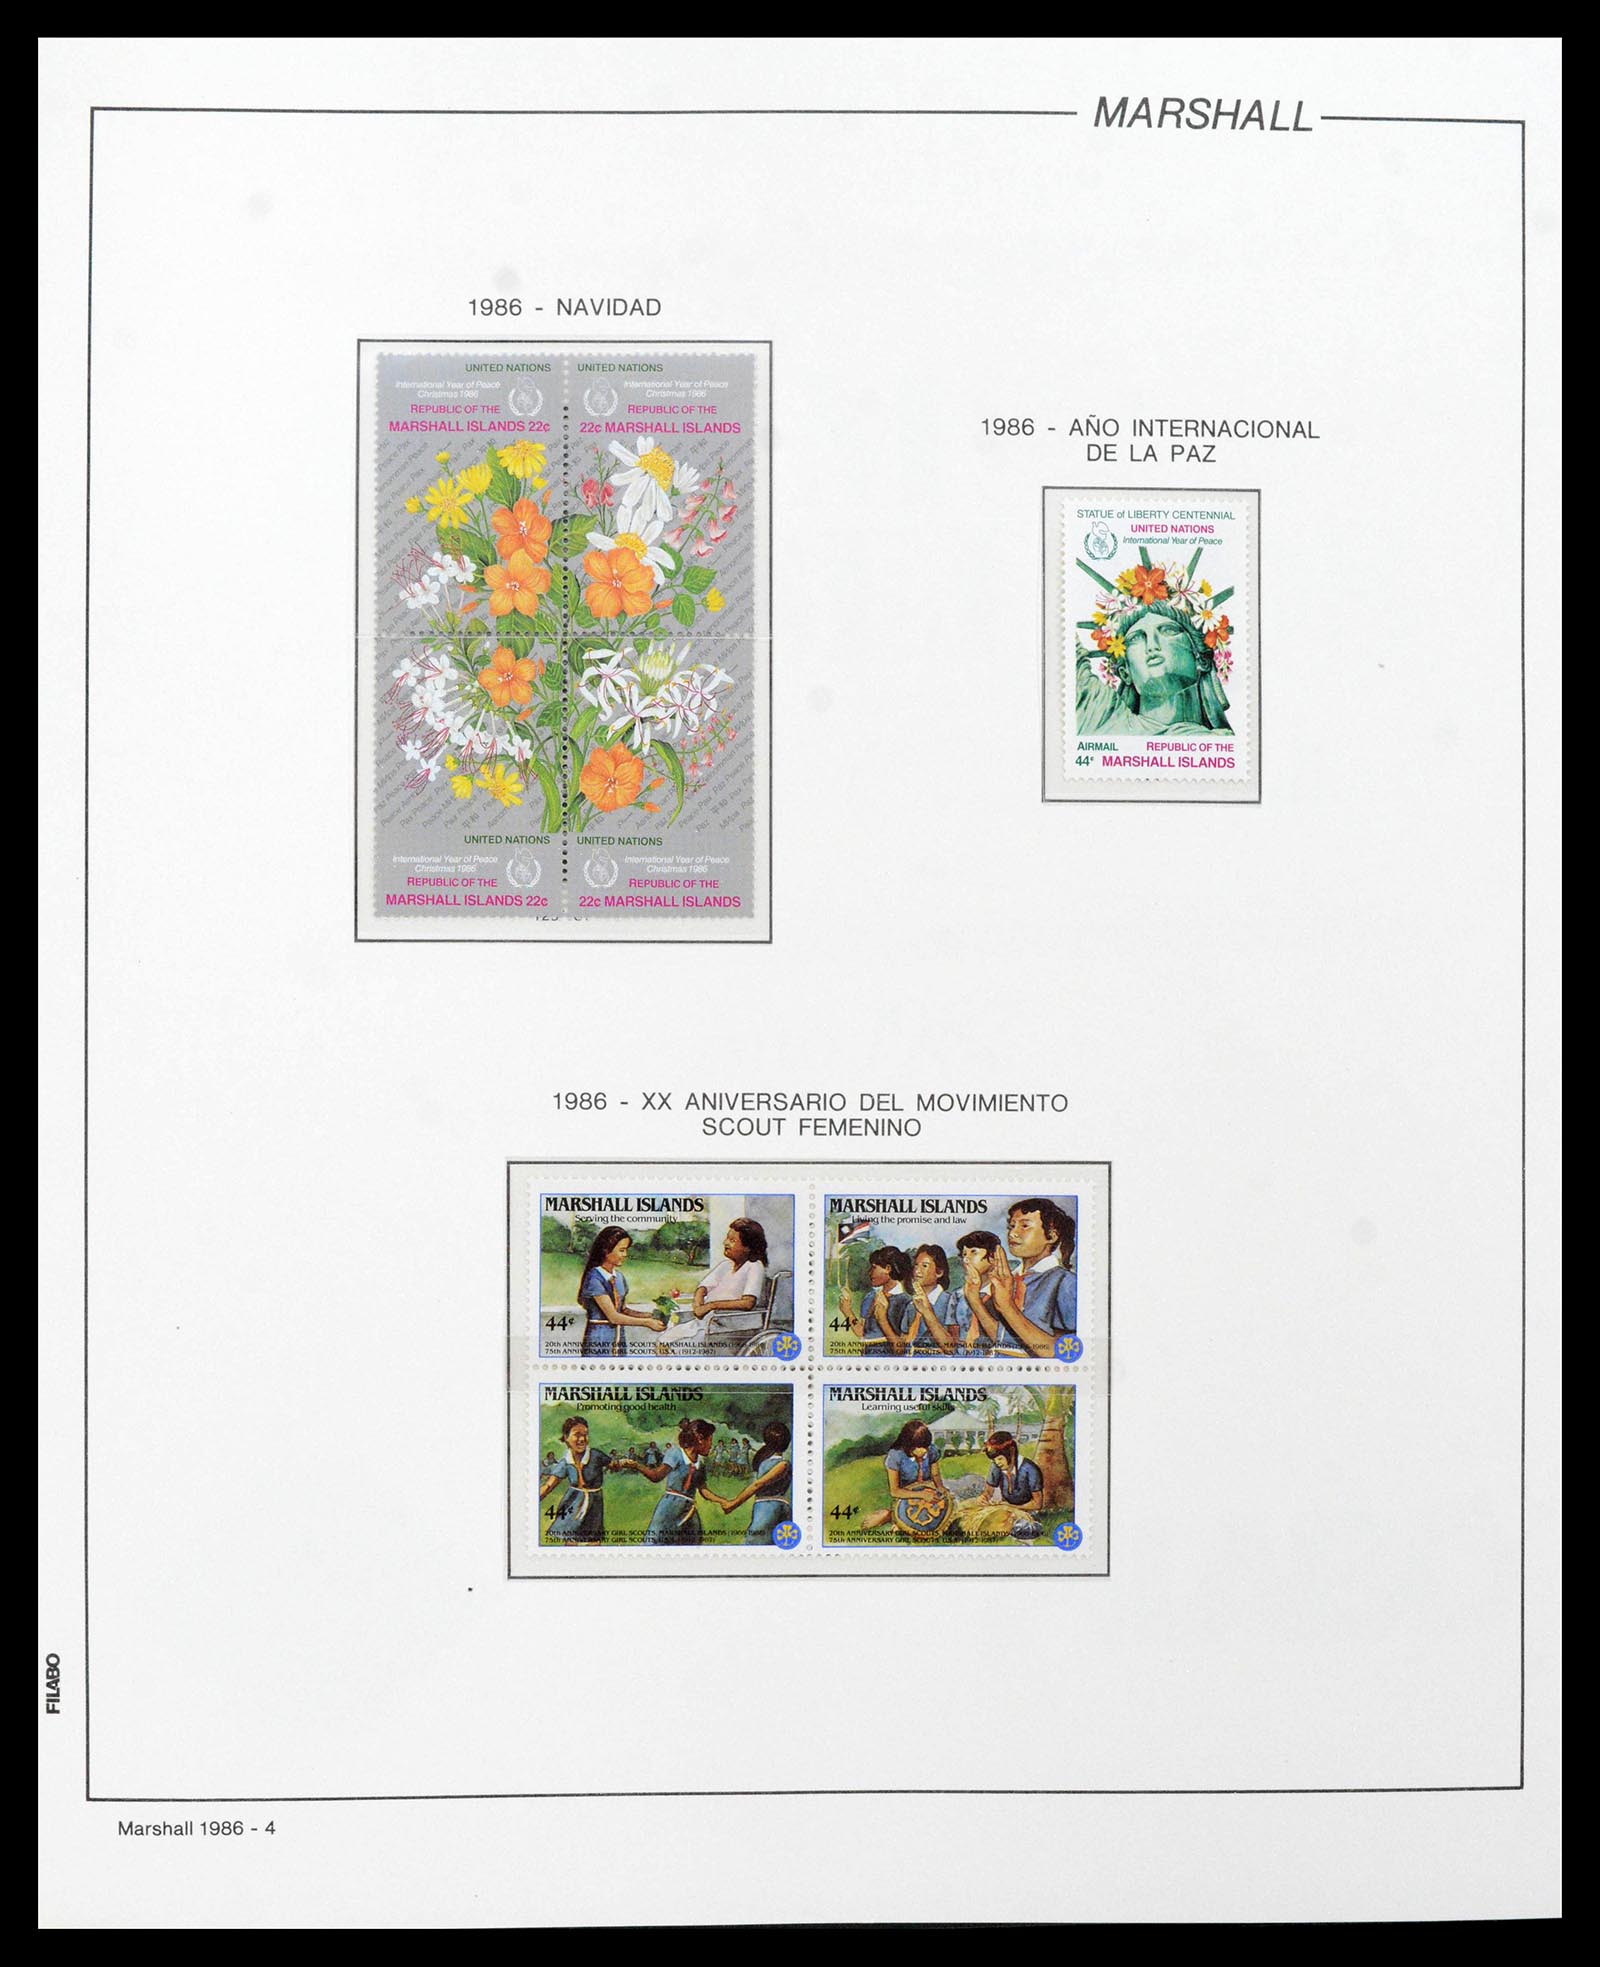 39222 0121 - Stamp collection 39222 Palau, Micronesia and Marshall islands 1980-1995.